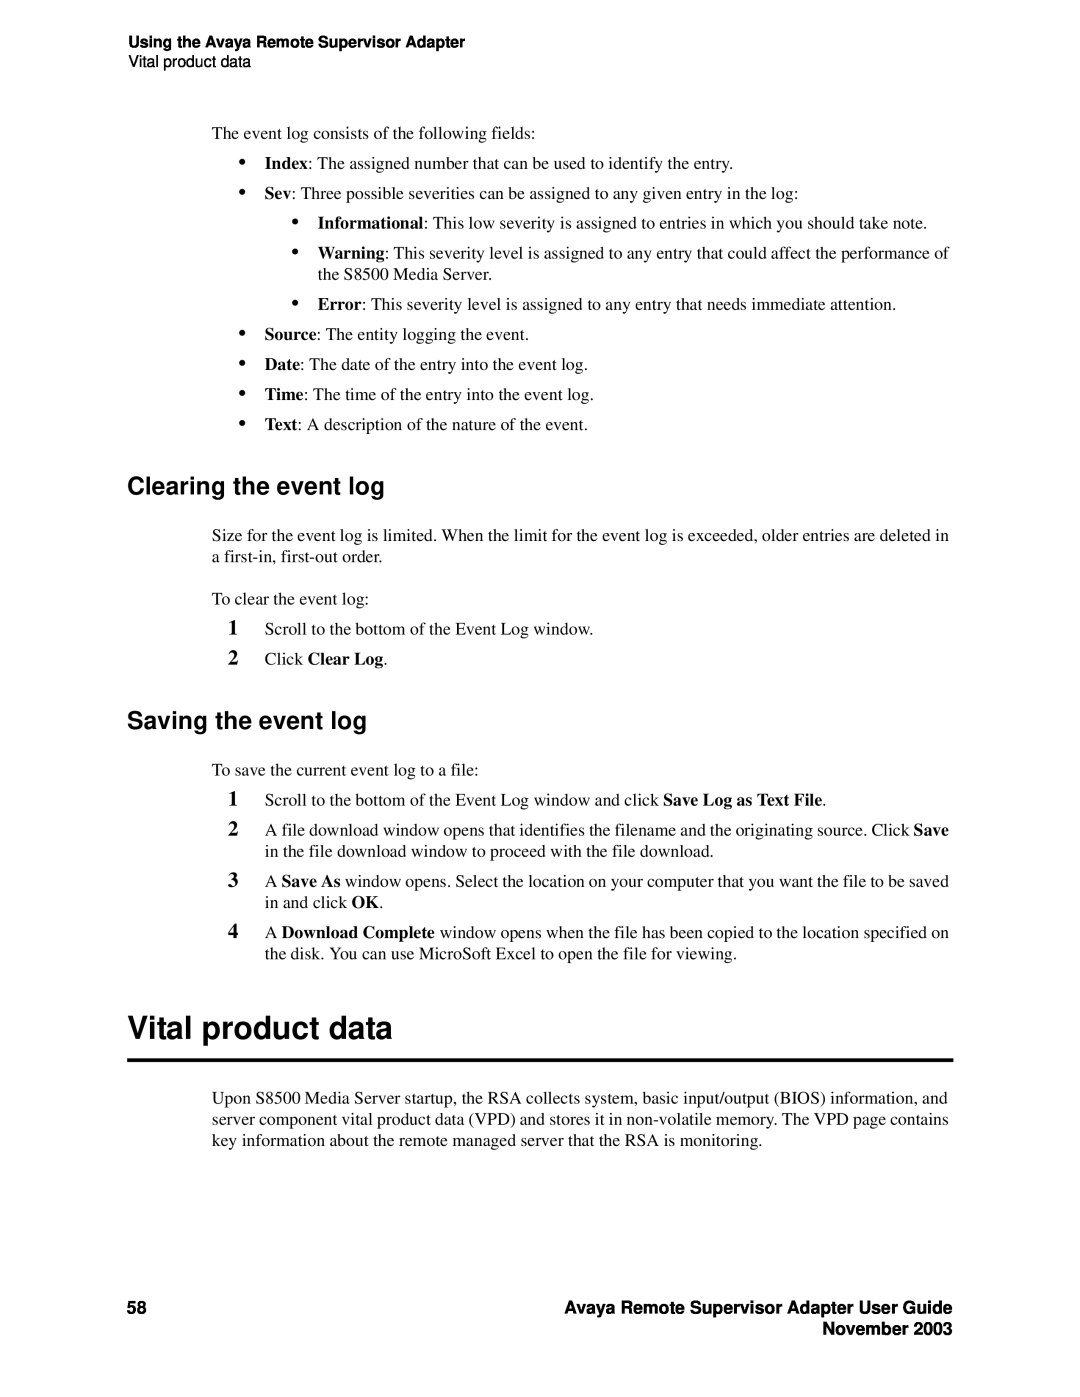 Avaya S8500 manual Vital product data, Clearing the event log, Saving the event log, Click Clear Log, November 